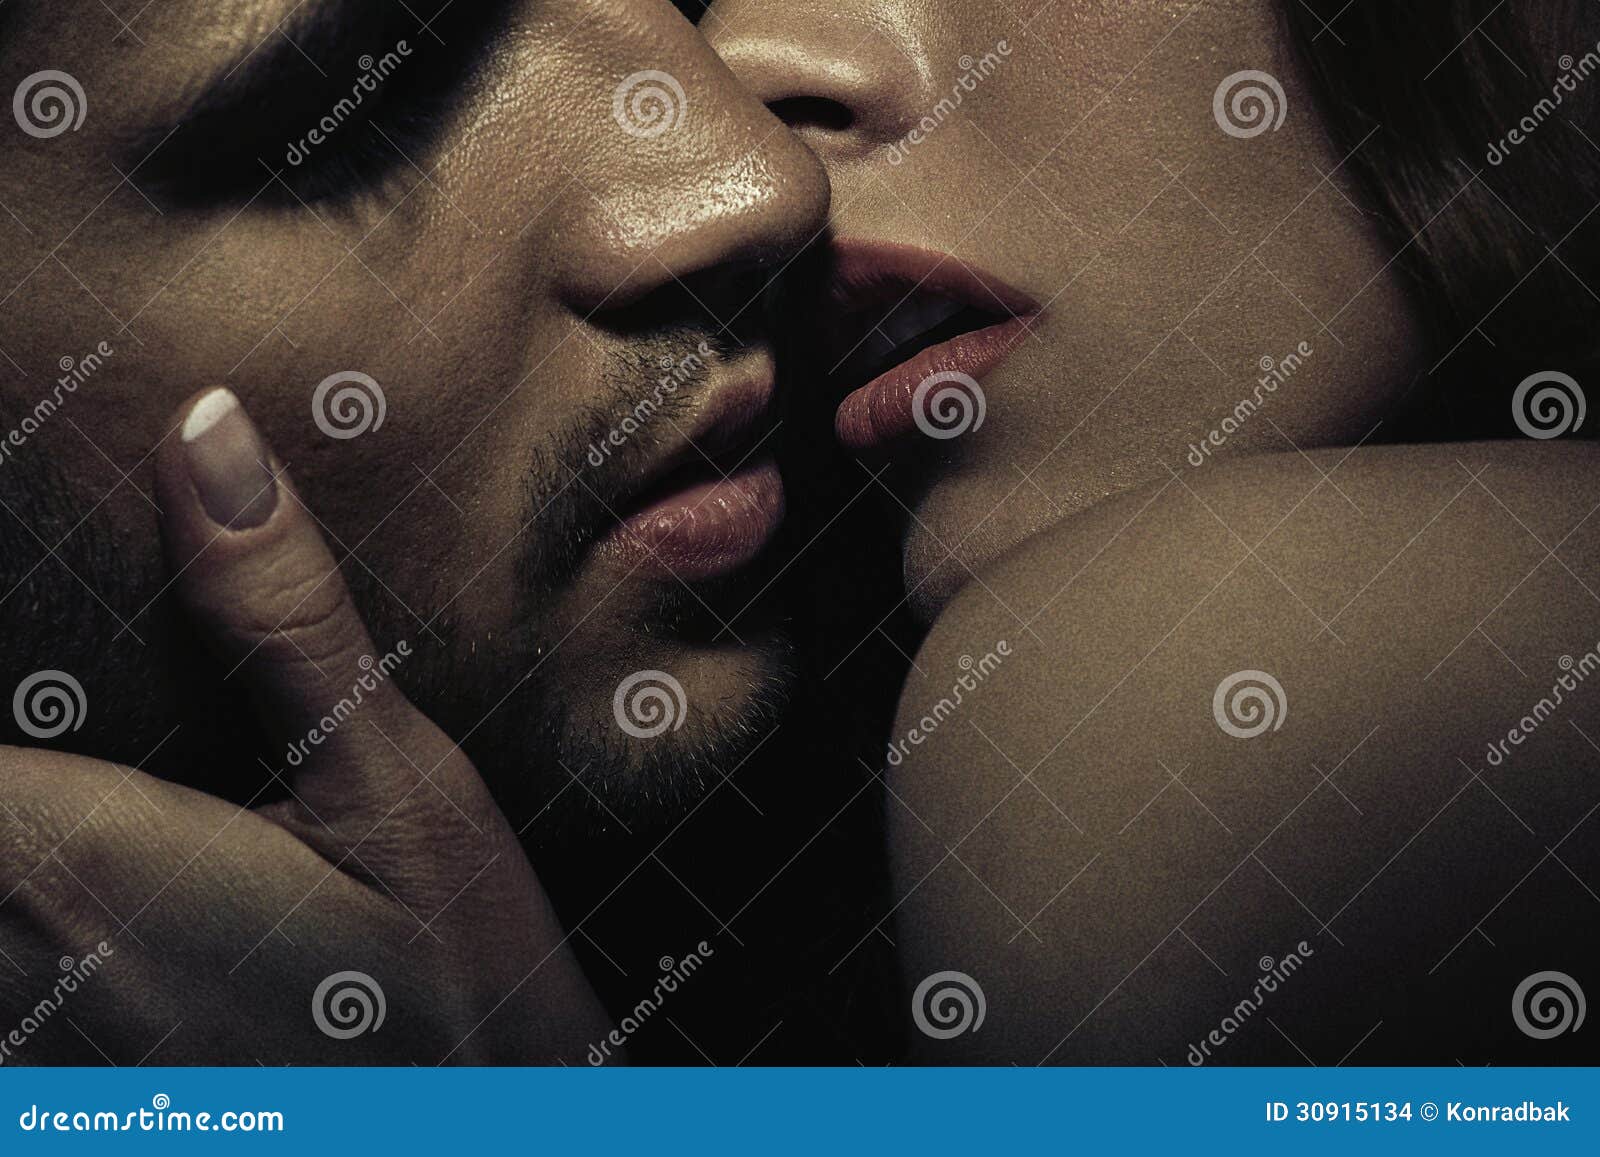 photo of sensual kissing couple